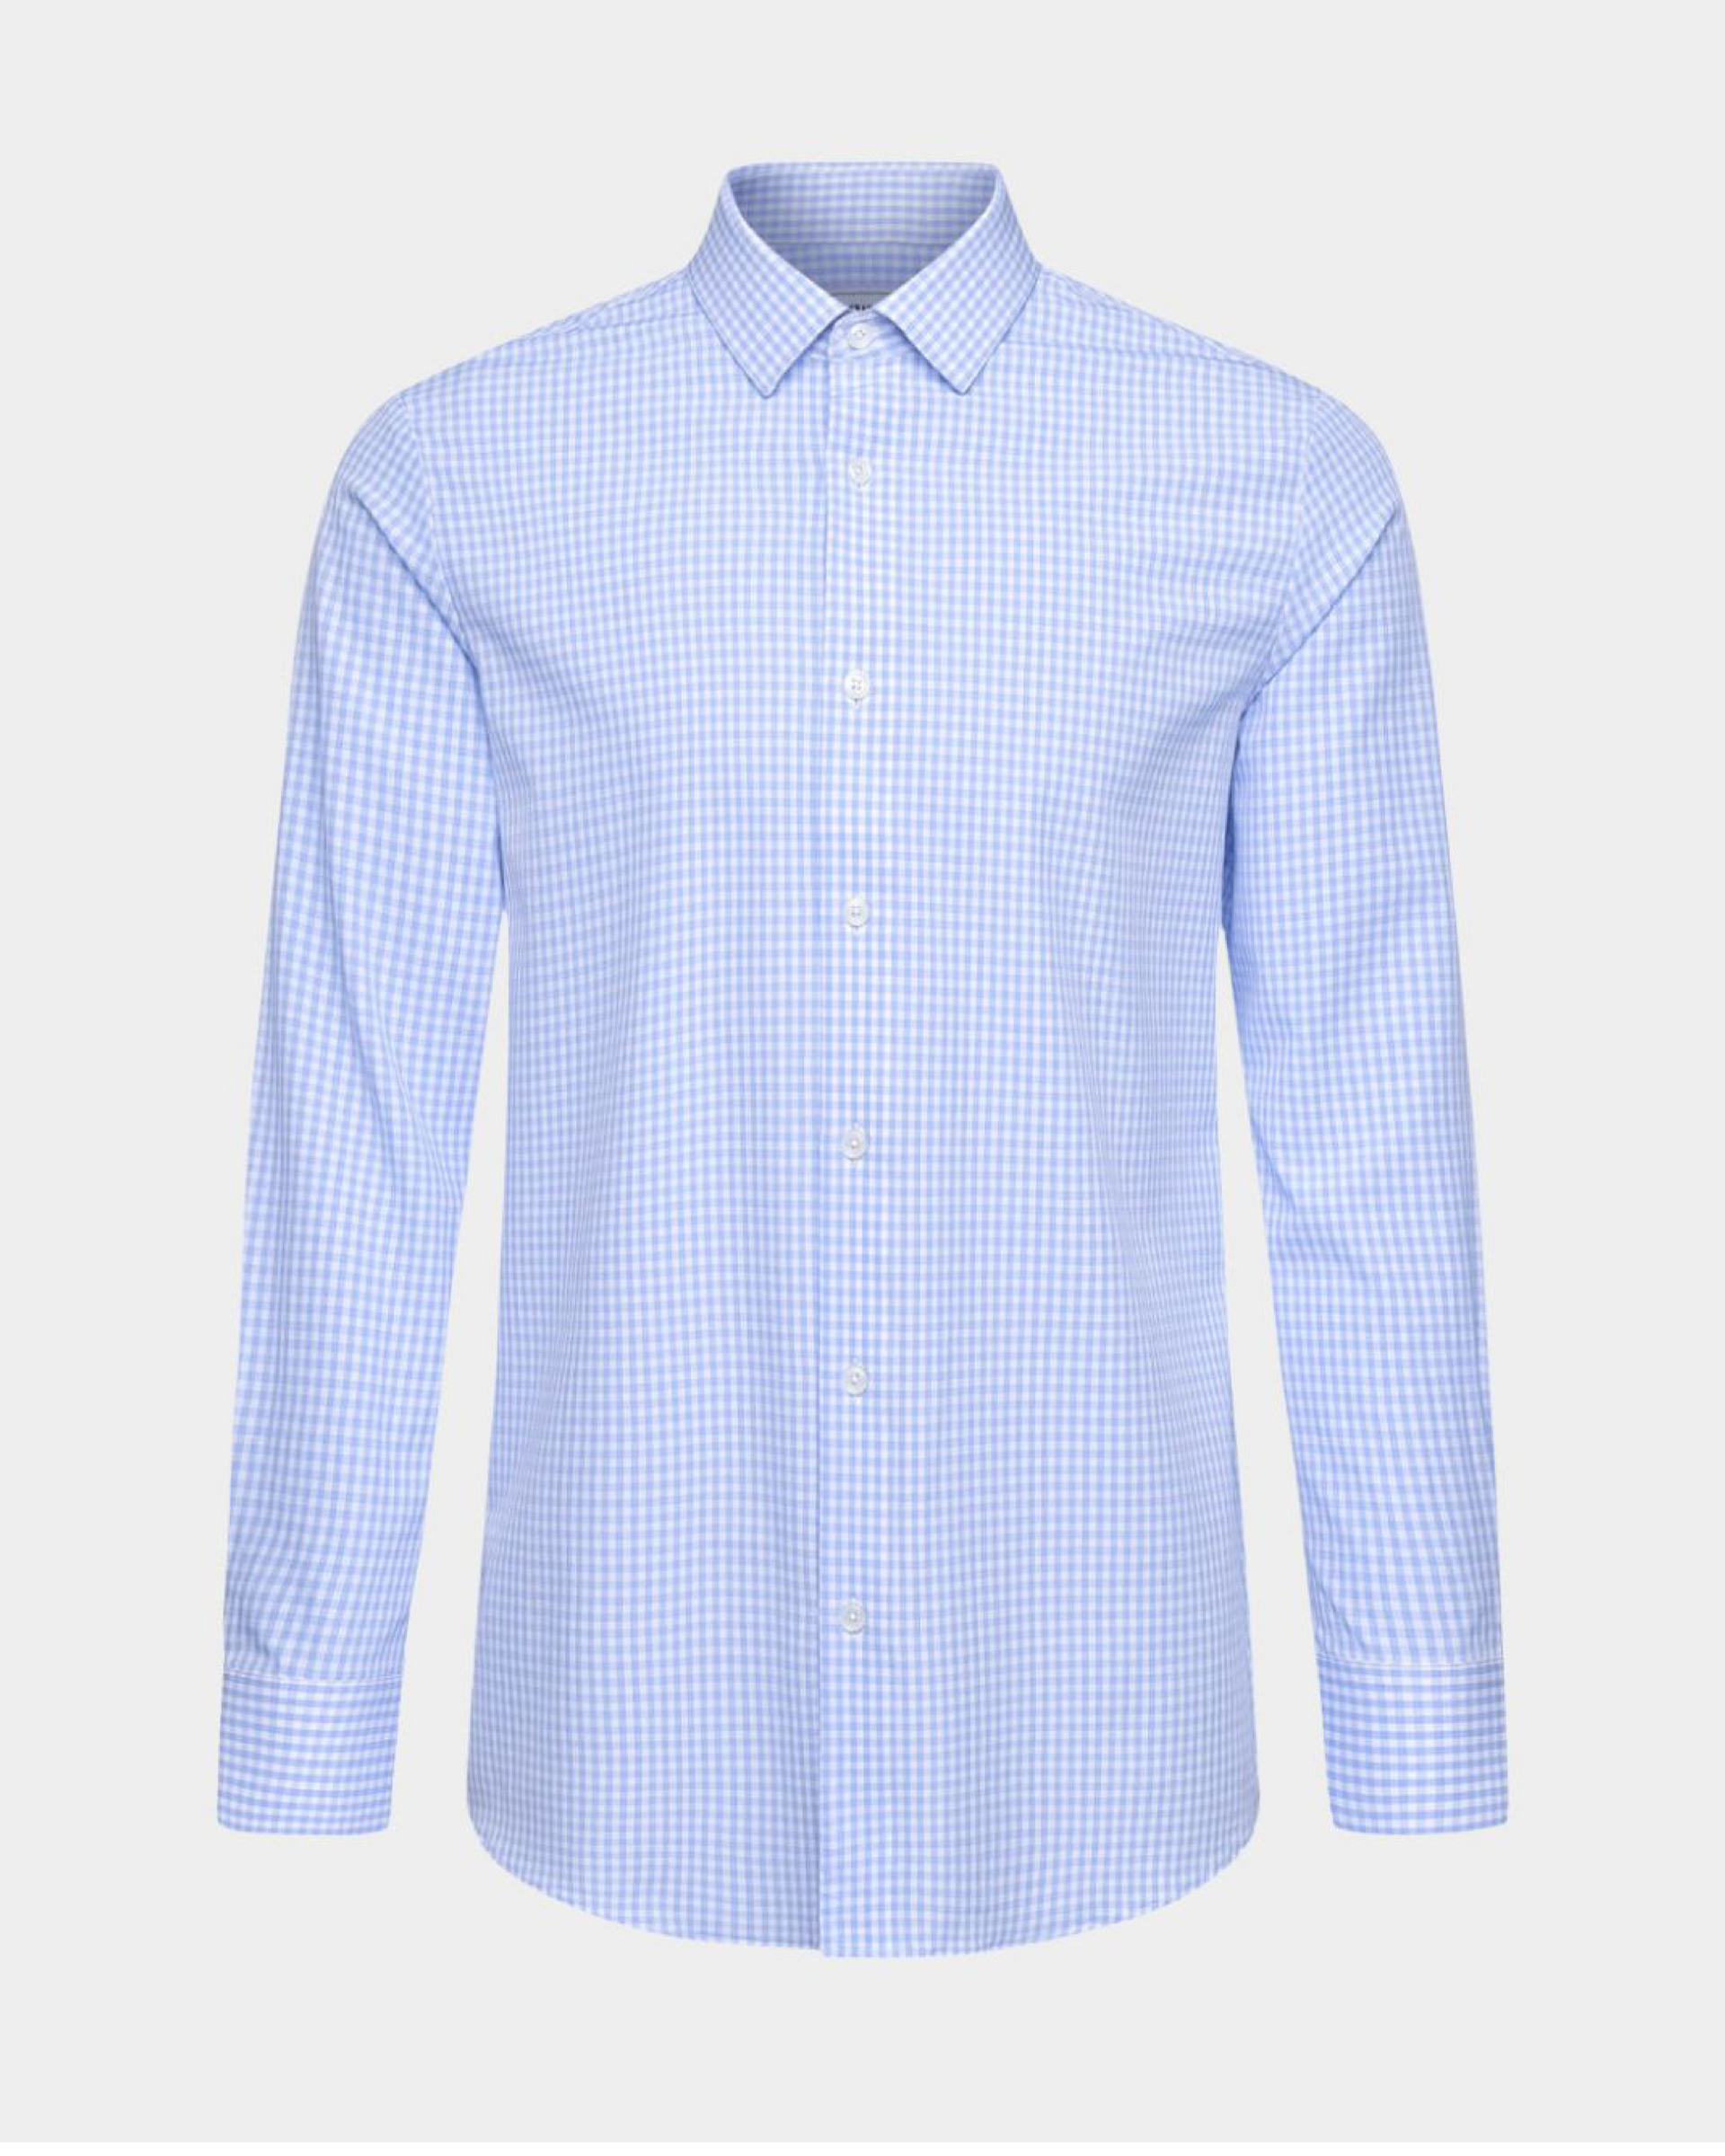 Phenom Professional Light Blue Gingham Dress Shirt